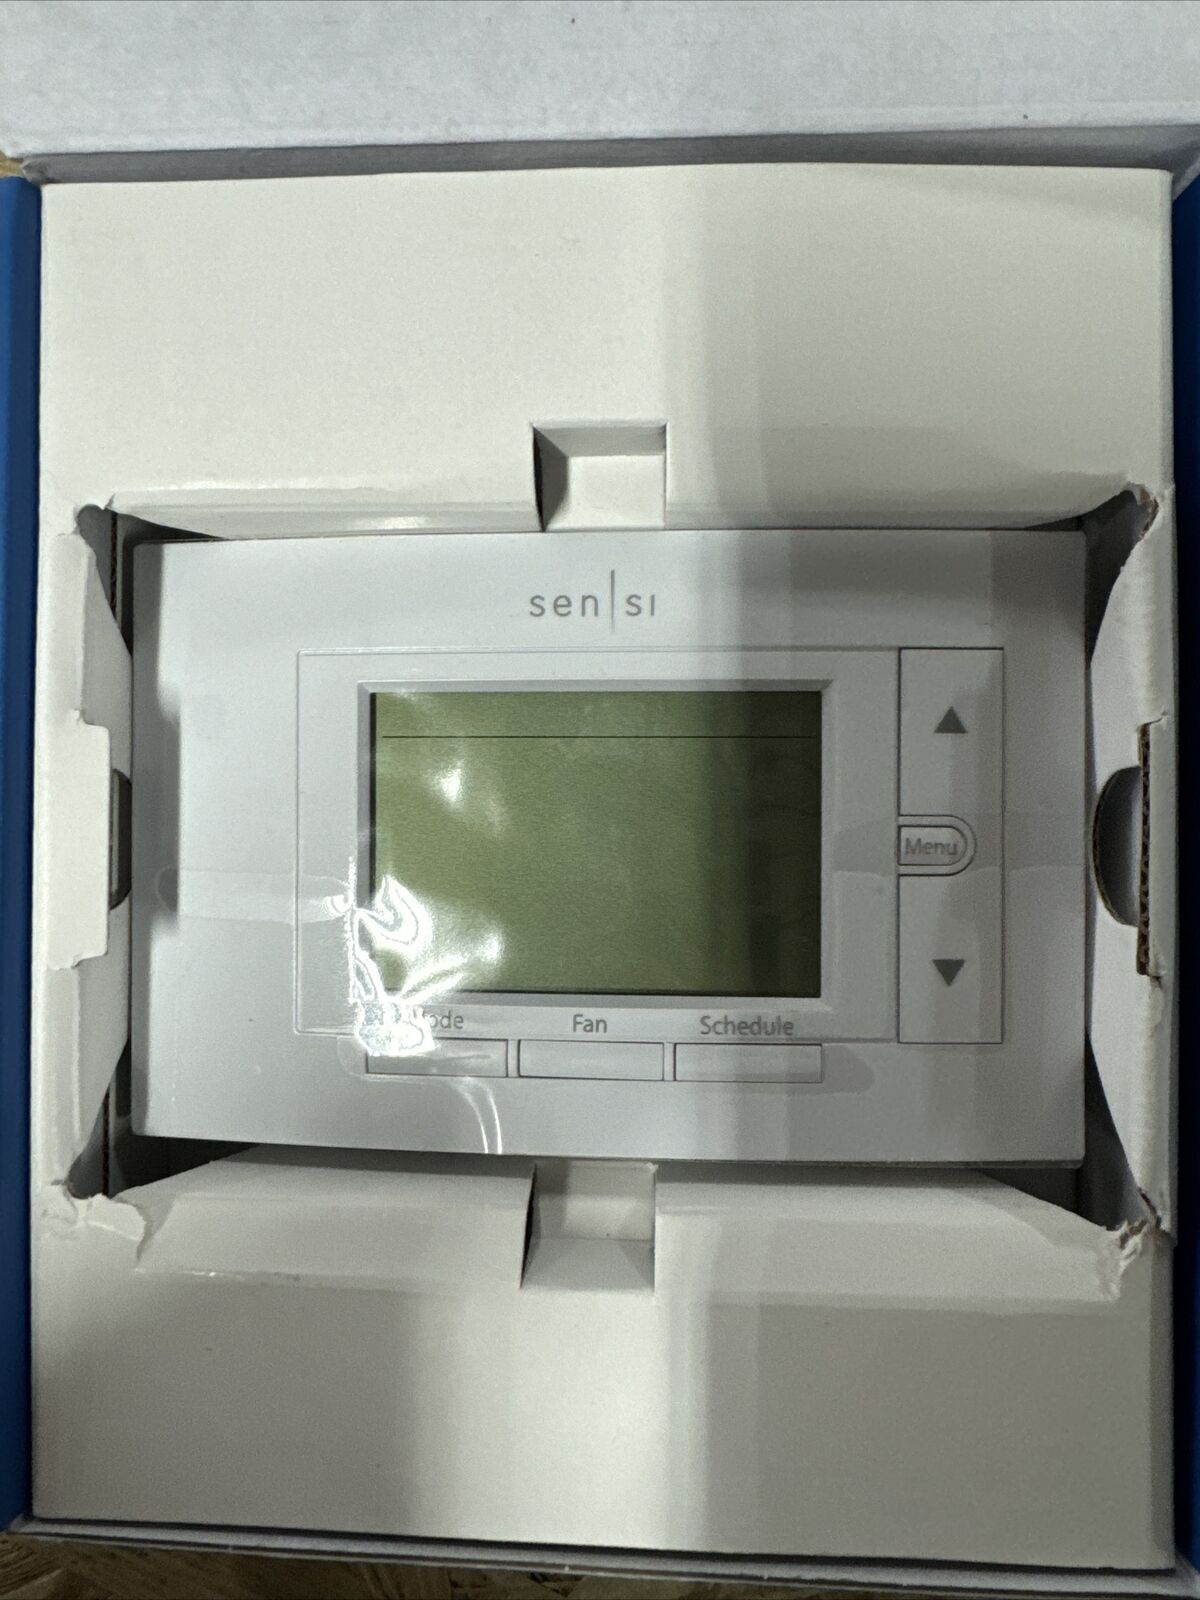 Emerson Sensi Smart Programmable Thermostat - White (ST55)